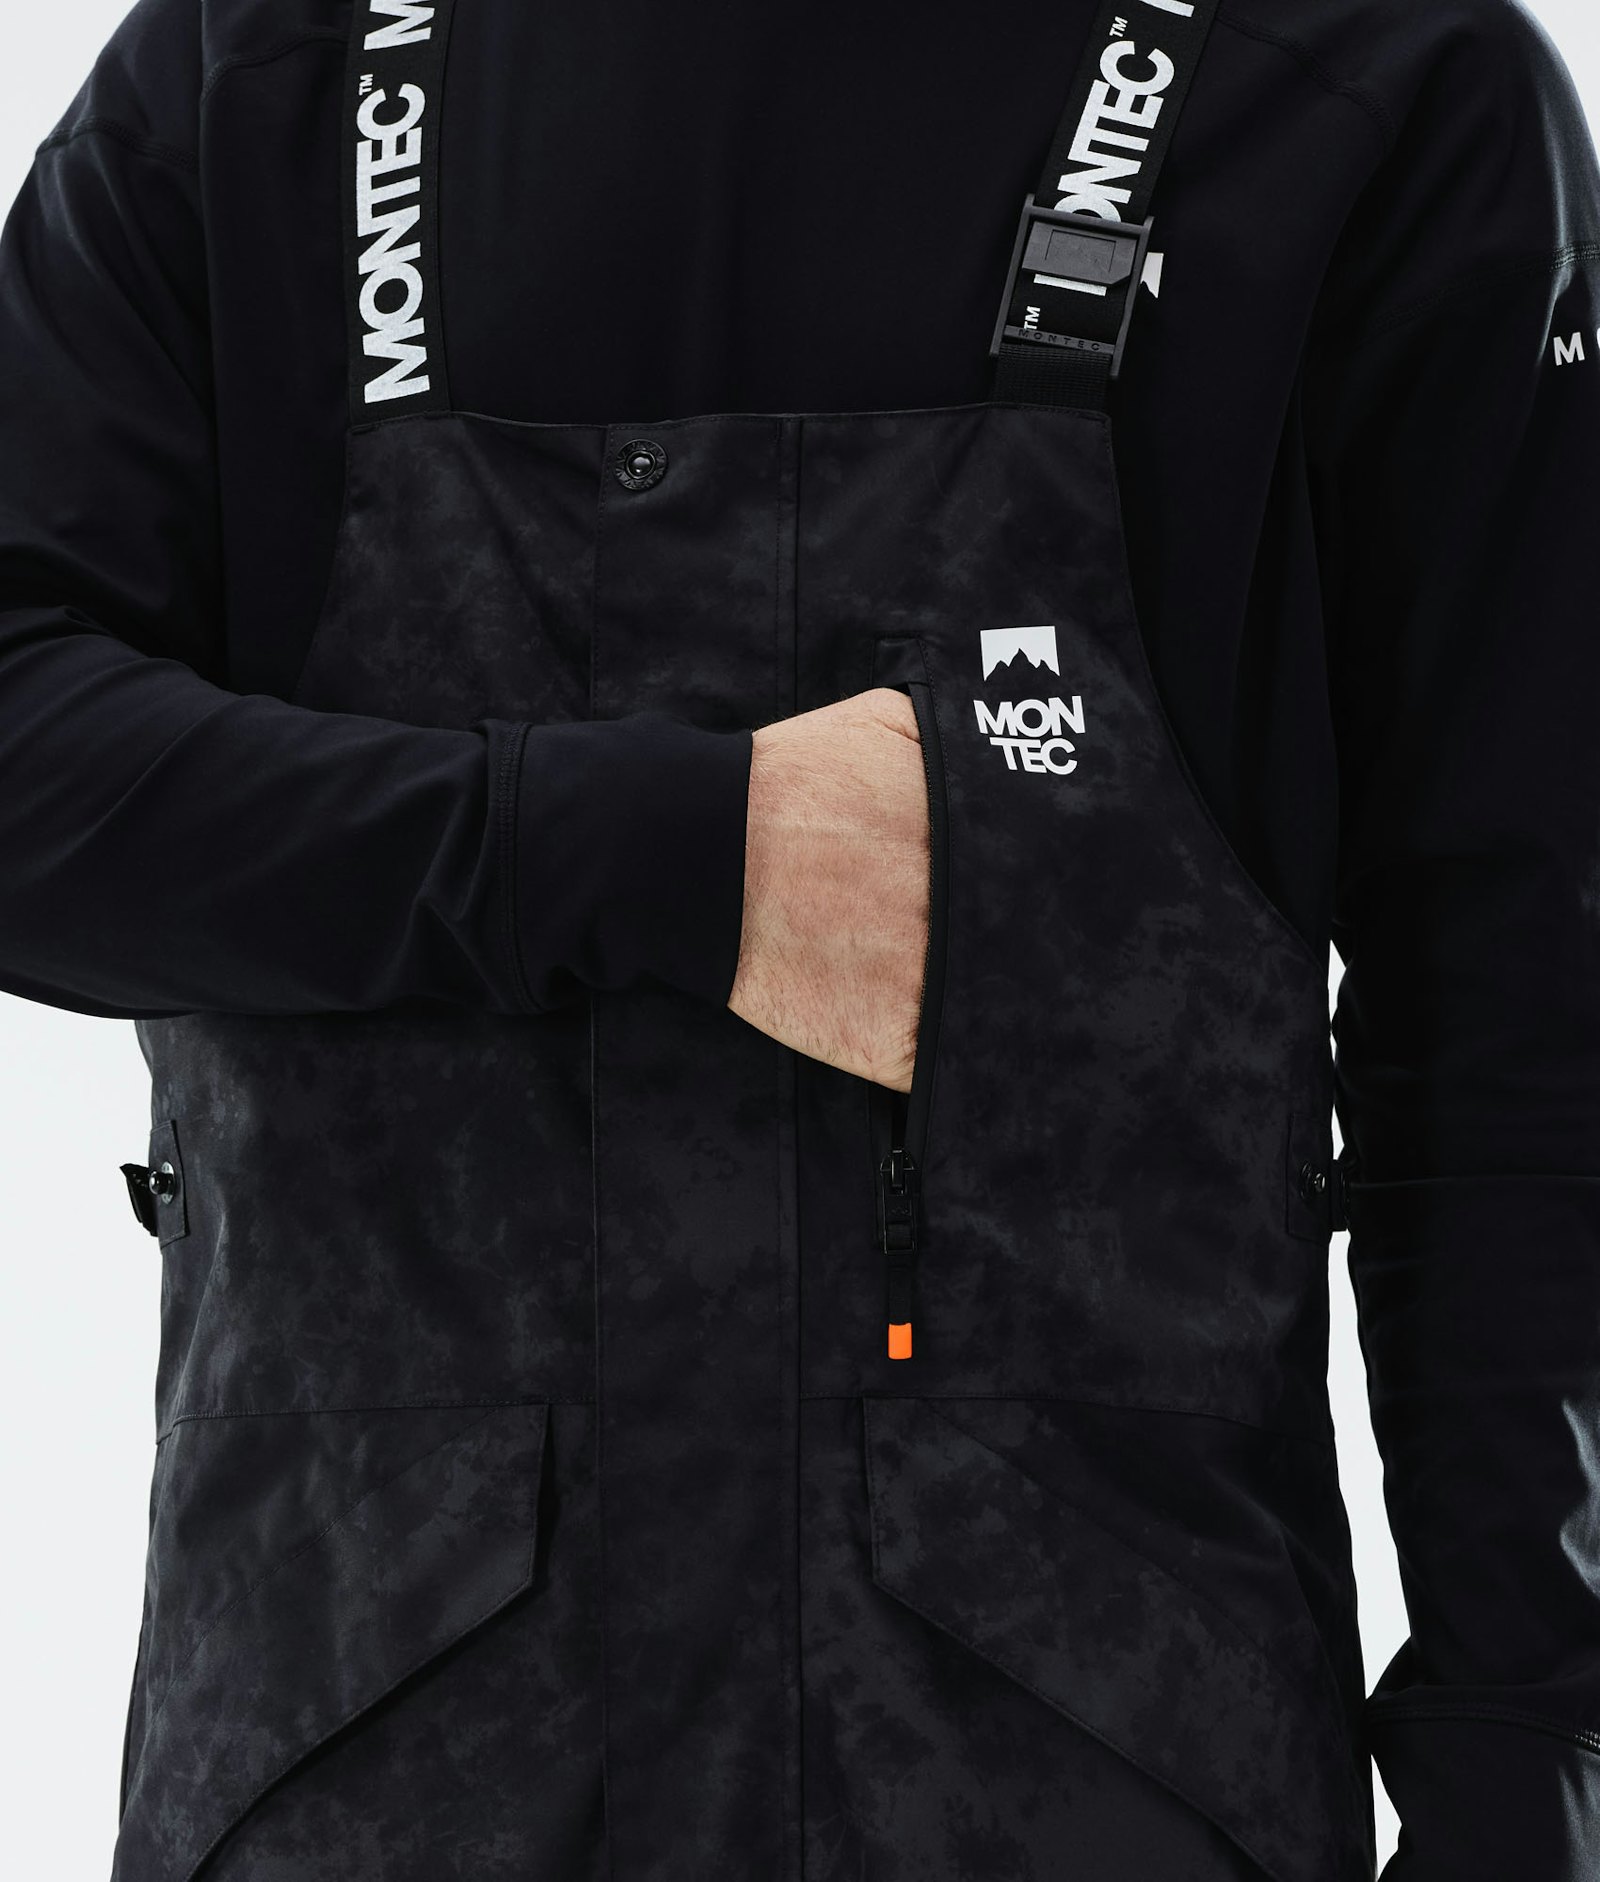 Fawk 2021 Pantalon de Snowboard Homme Black Tiedye